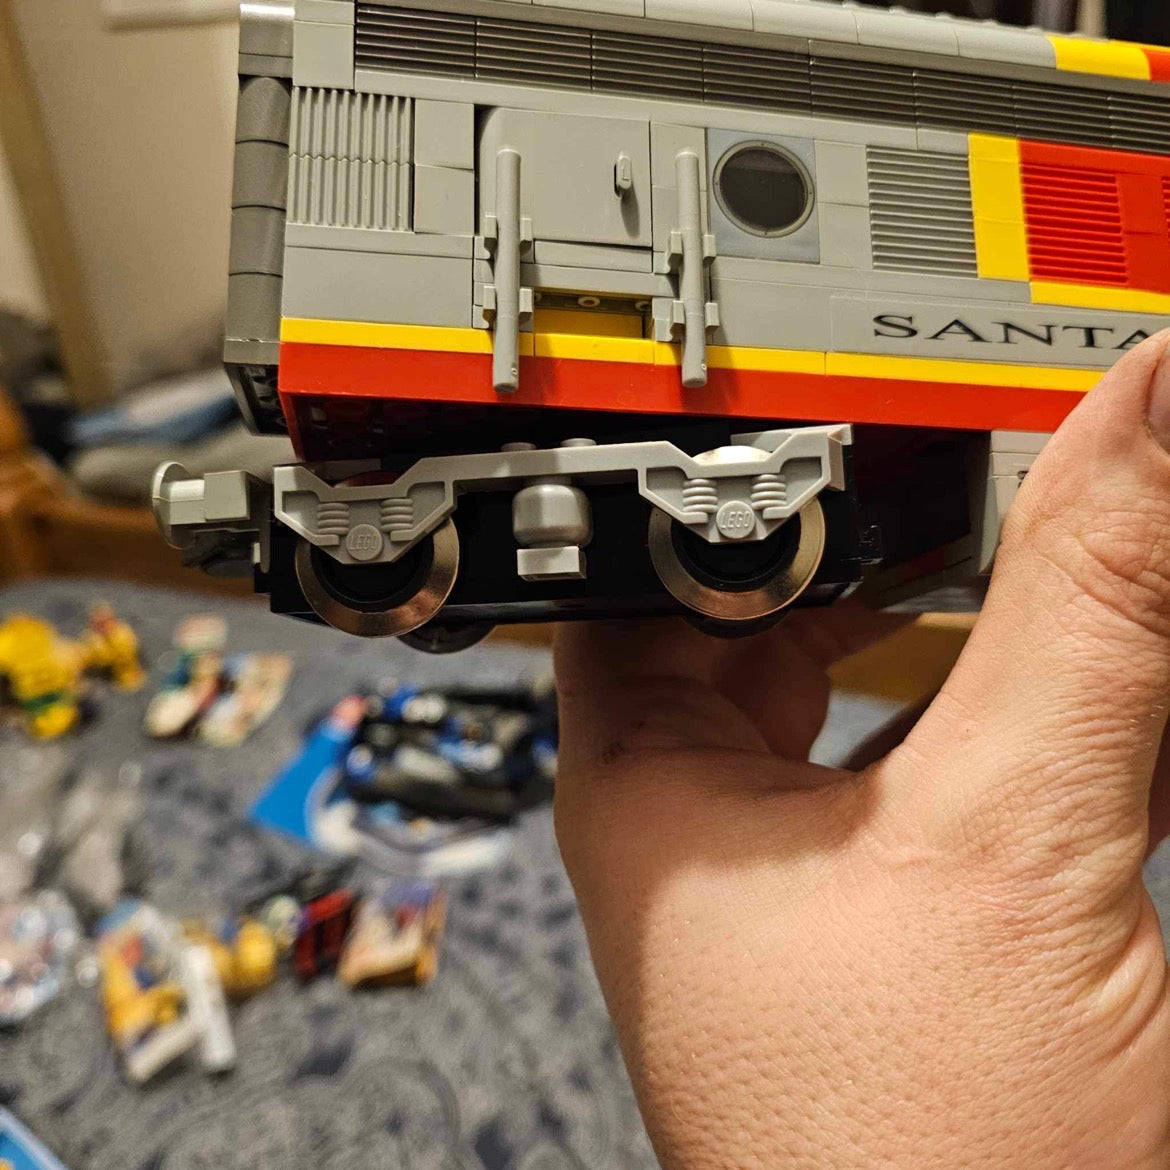 Lego Railway, Santa Fe Super Chief 6 Car Set (Motorised).